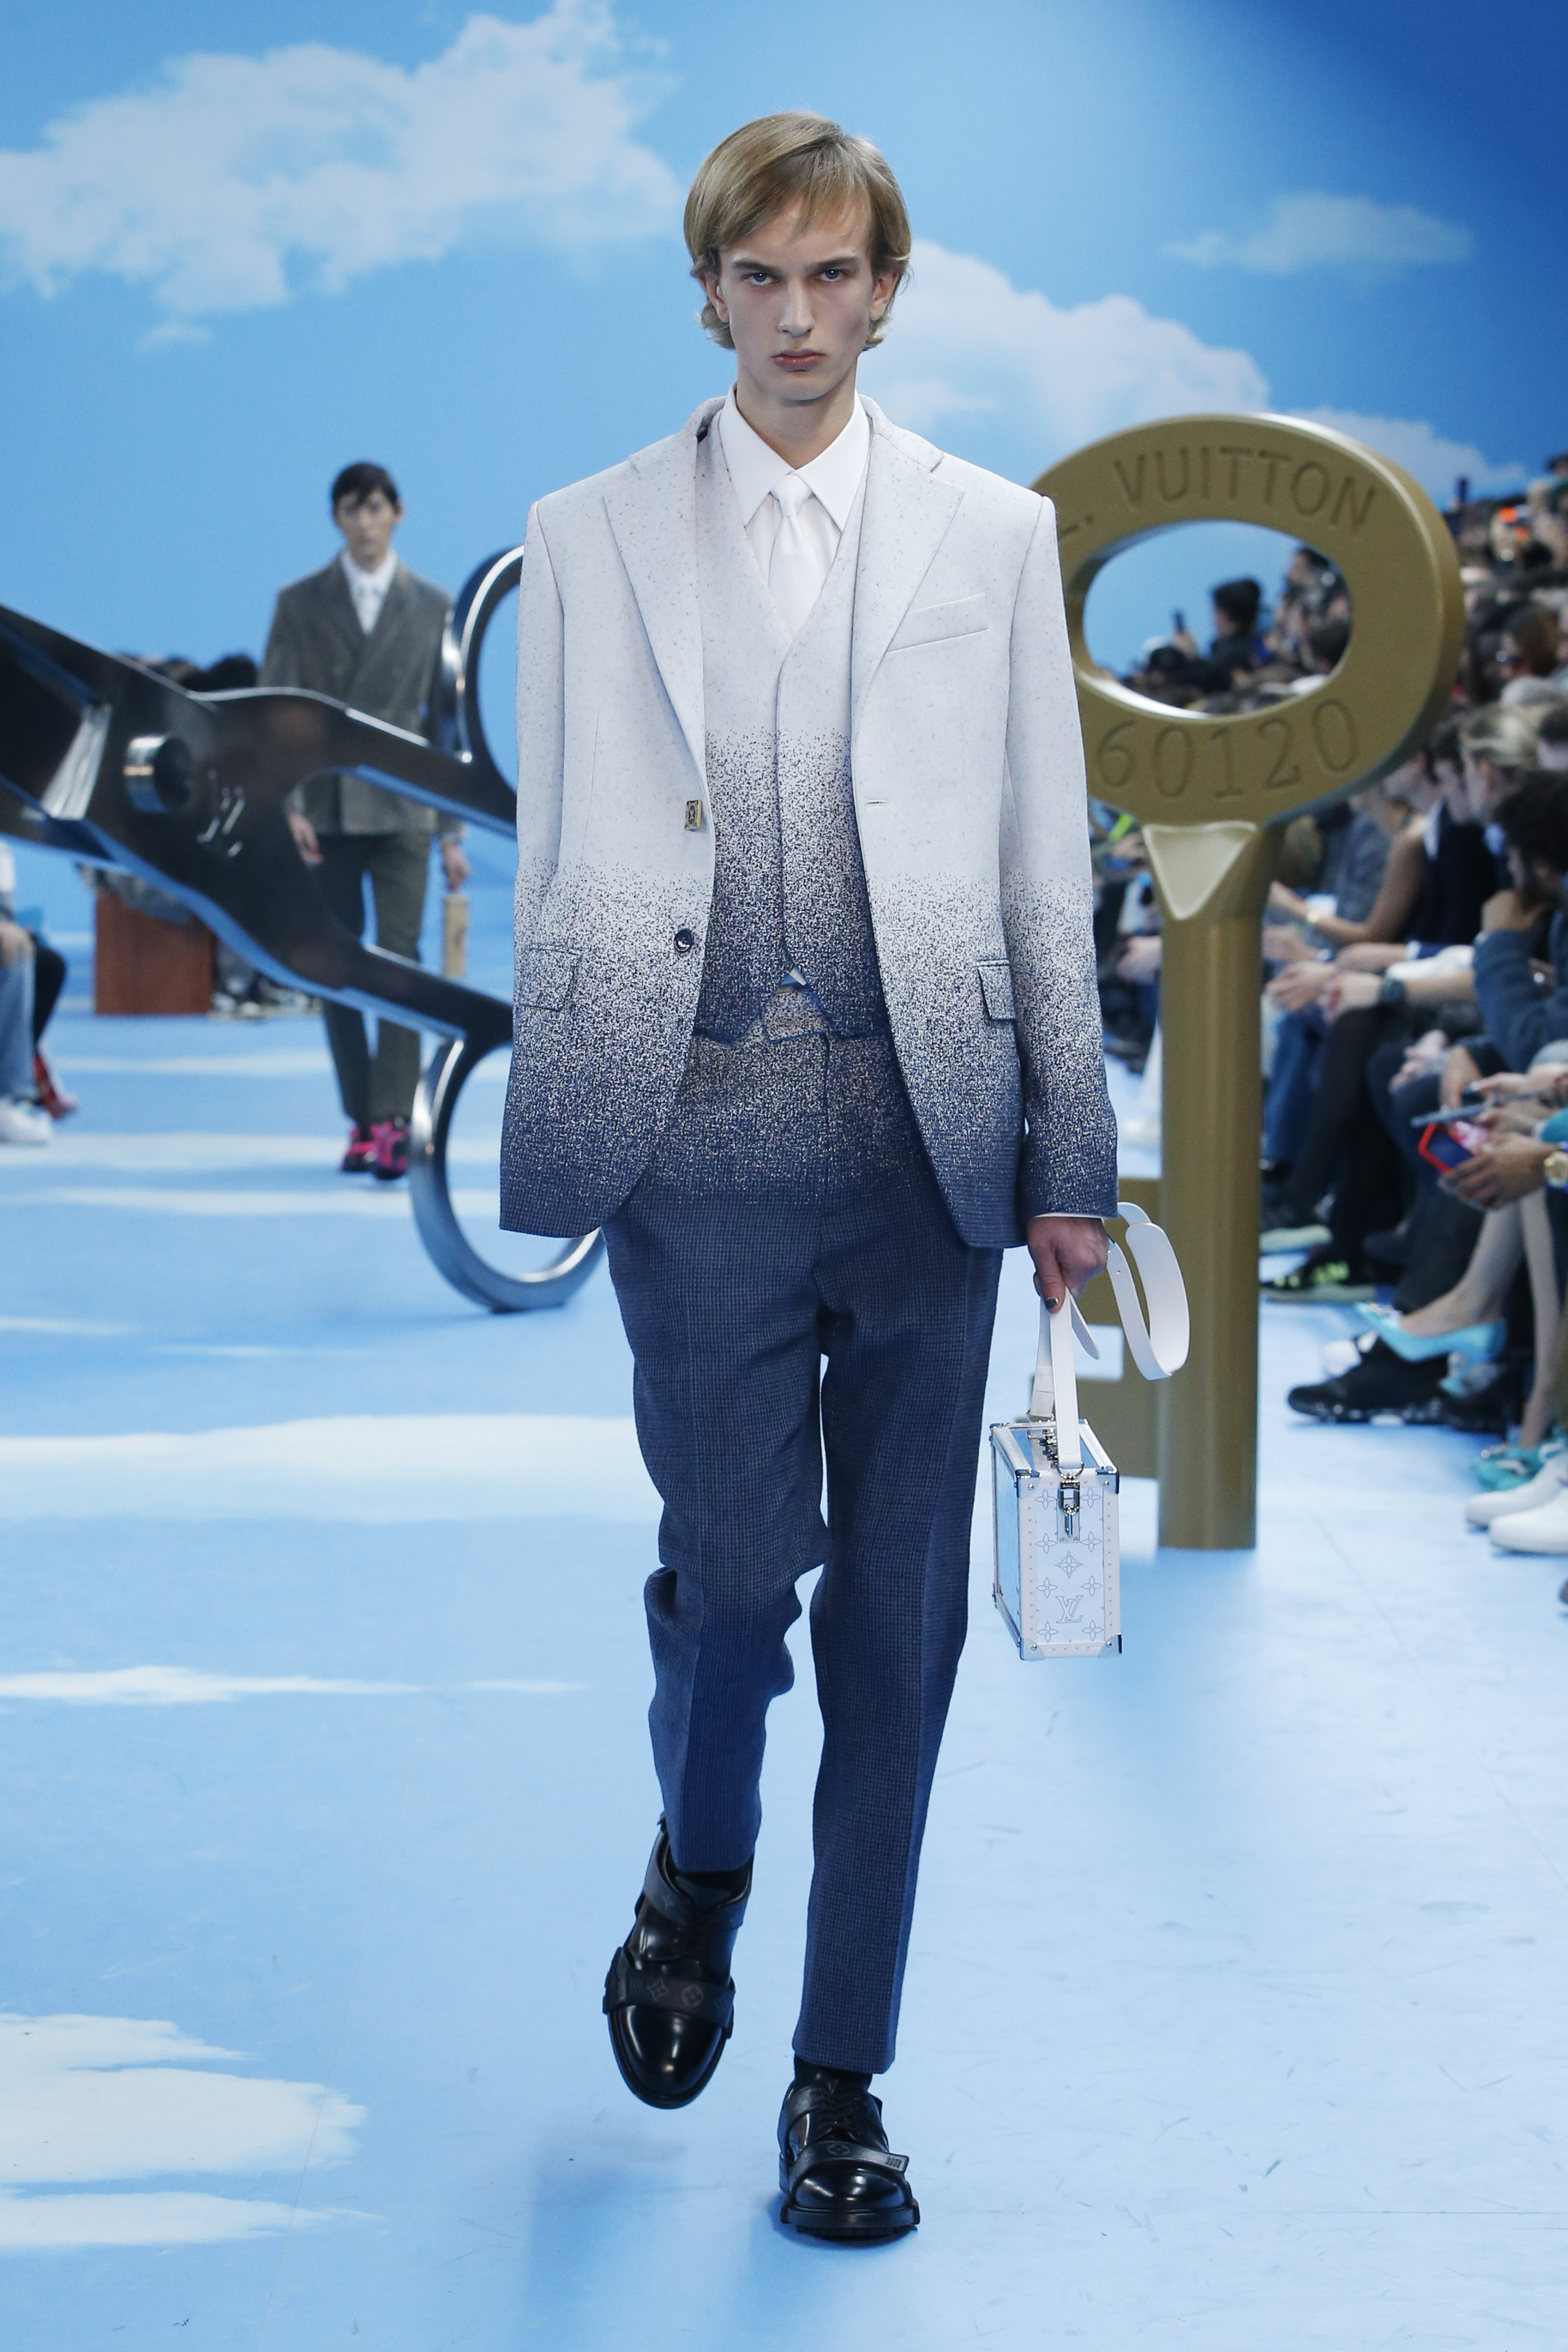 Paris Fashion Week Men's Delivered The Very Best In Sartorial Design ICON